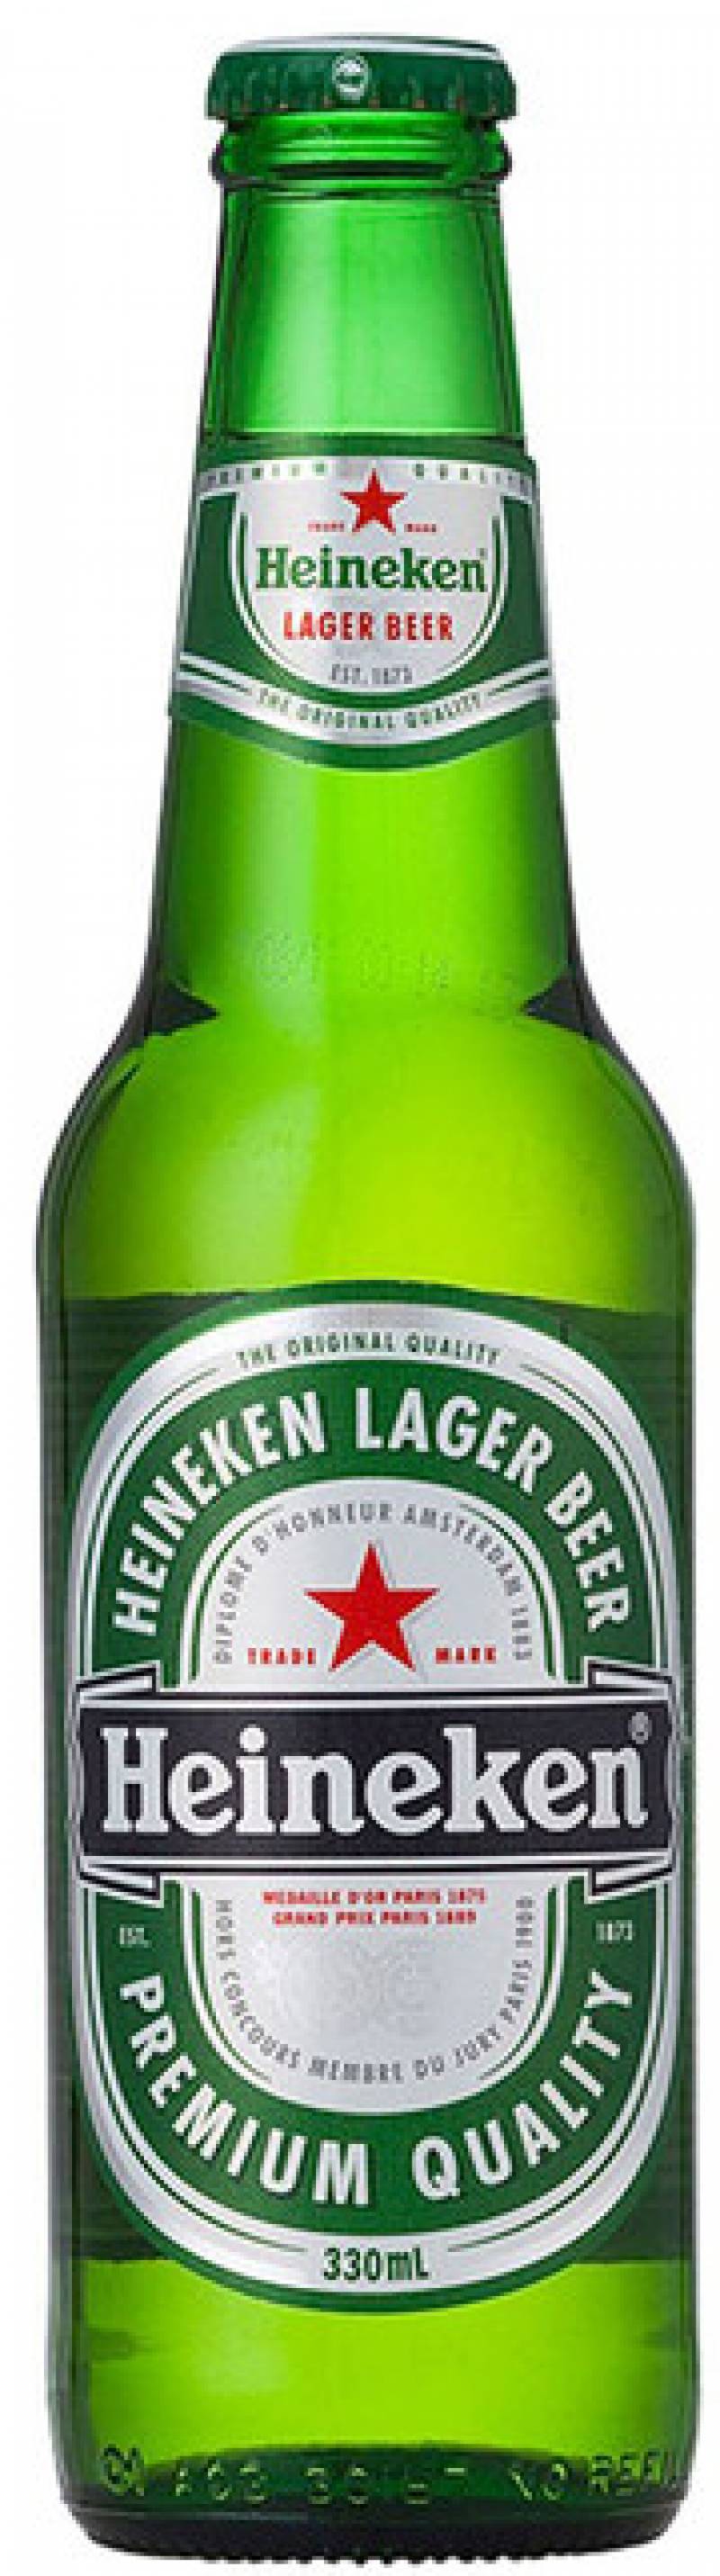 Пиво Хайнекен Премиум  (Russia)  0,33 л.  &quot; Heineken Premium Quality &quot;